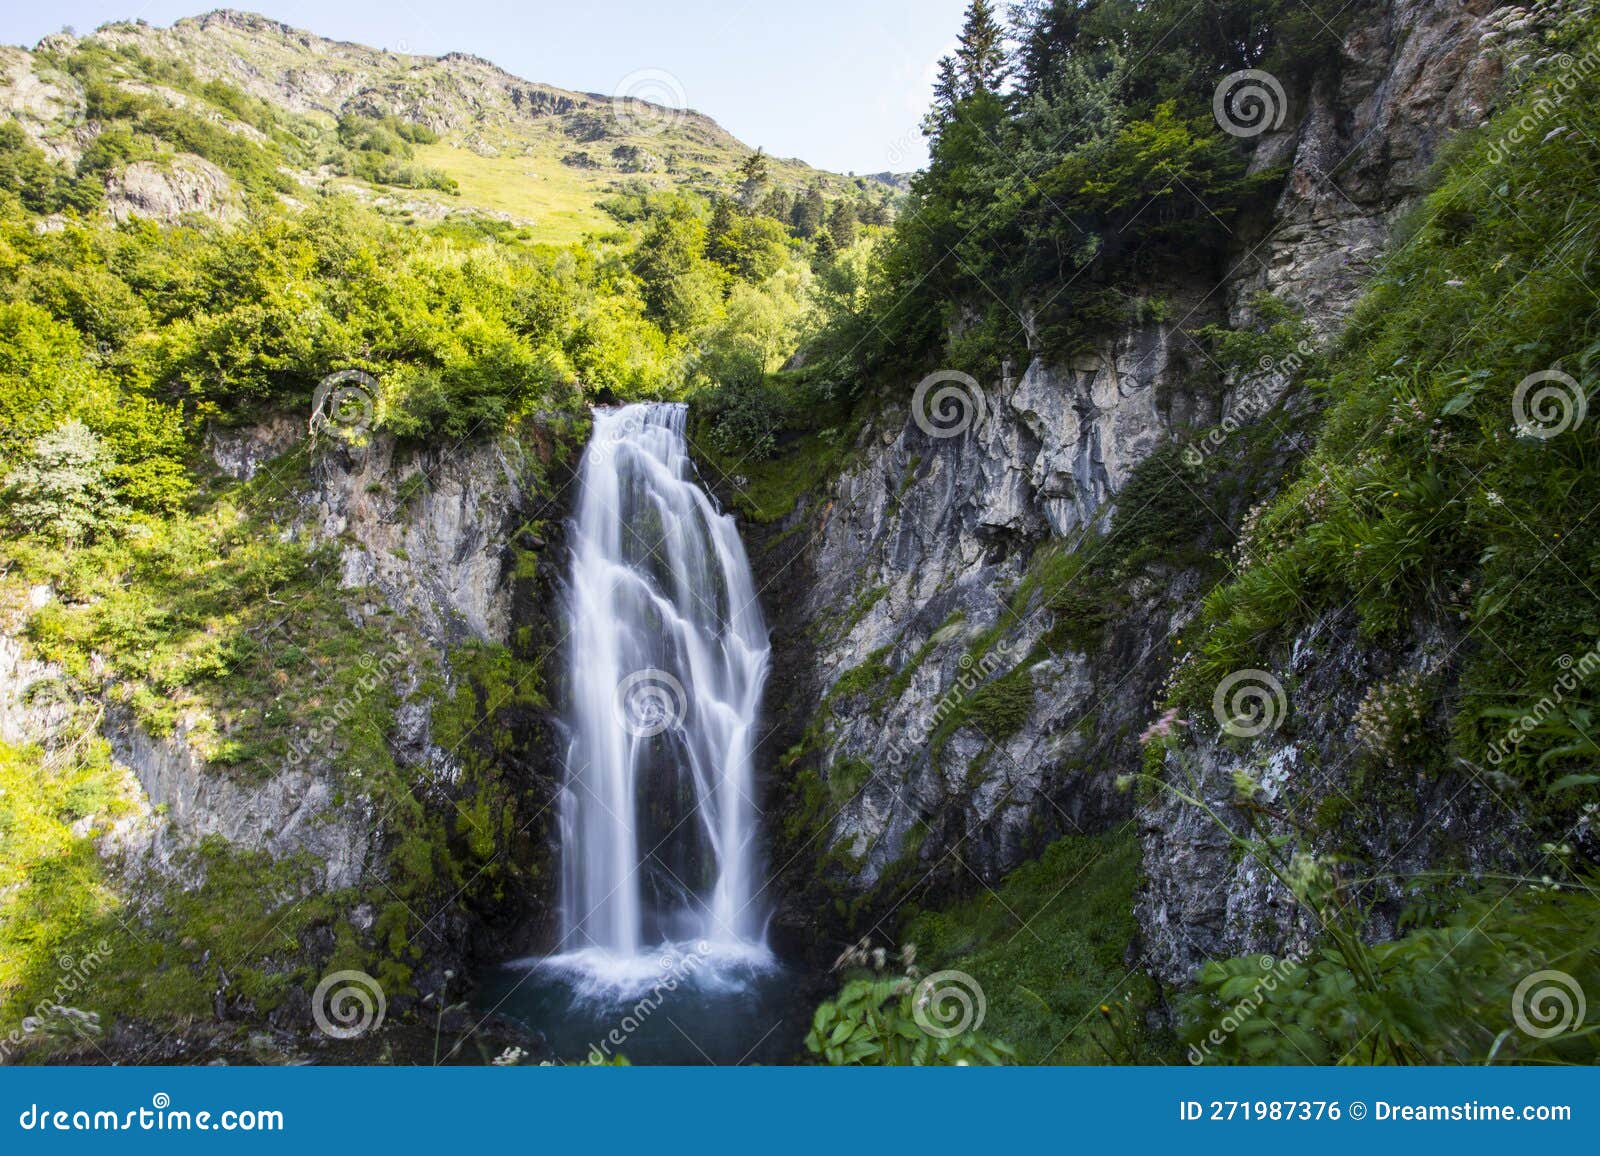 summer in sauth deth pish waterfall, val d aran, spain